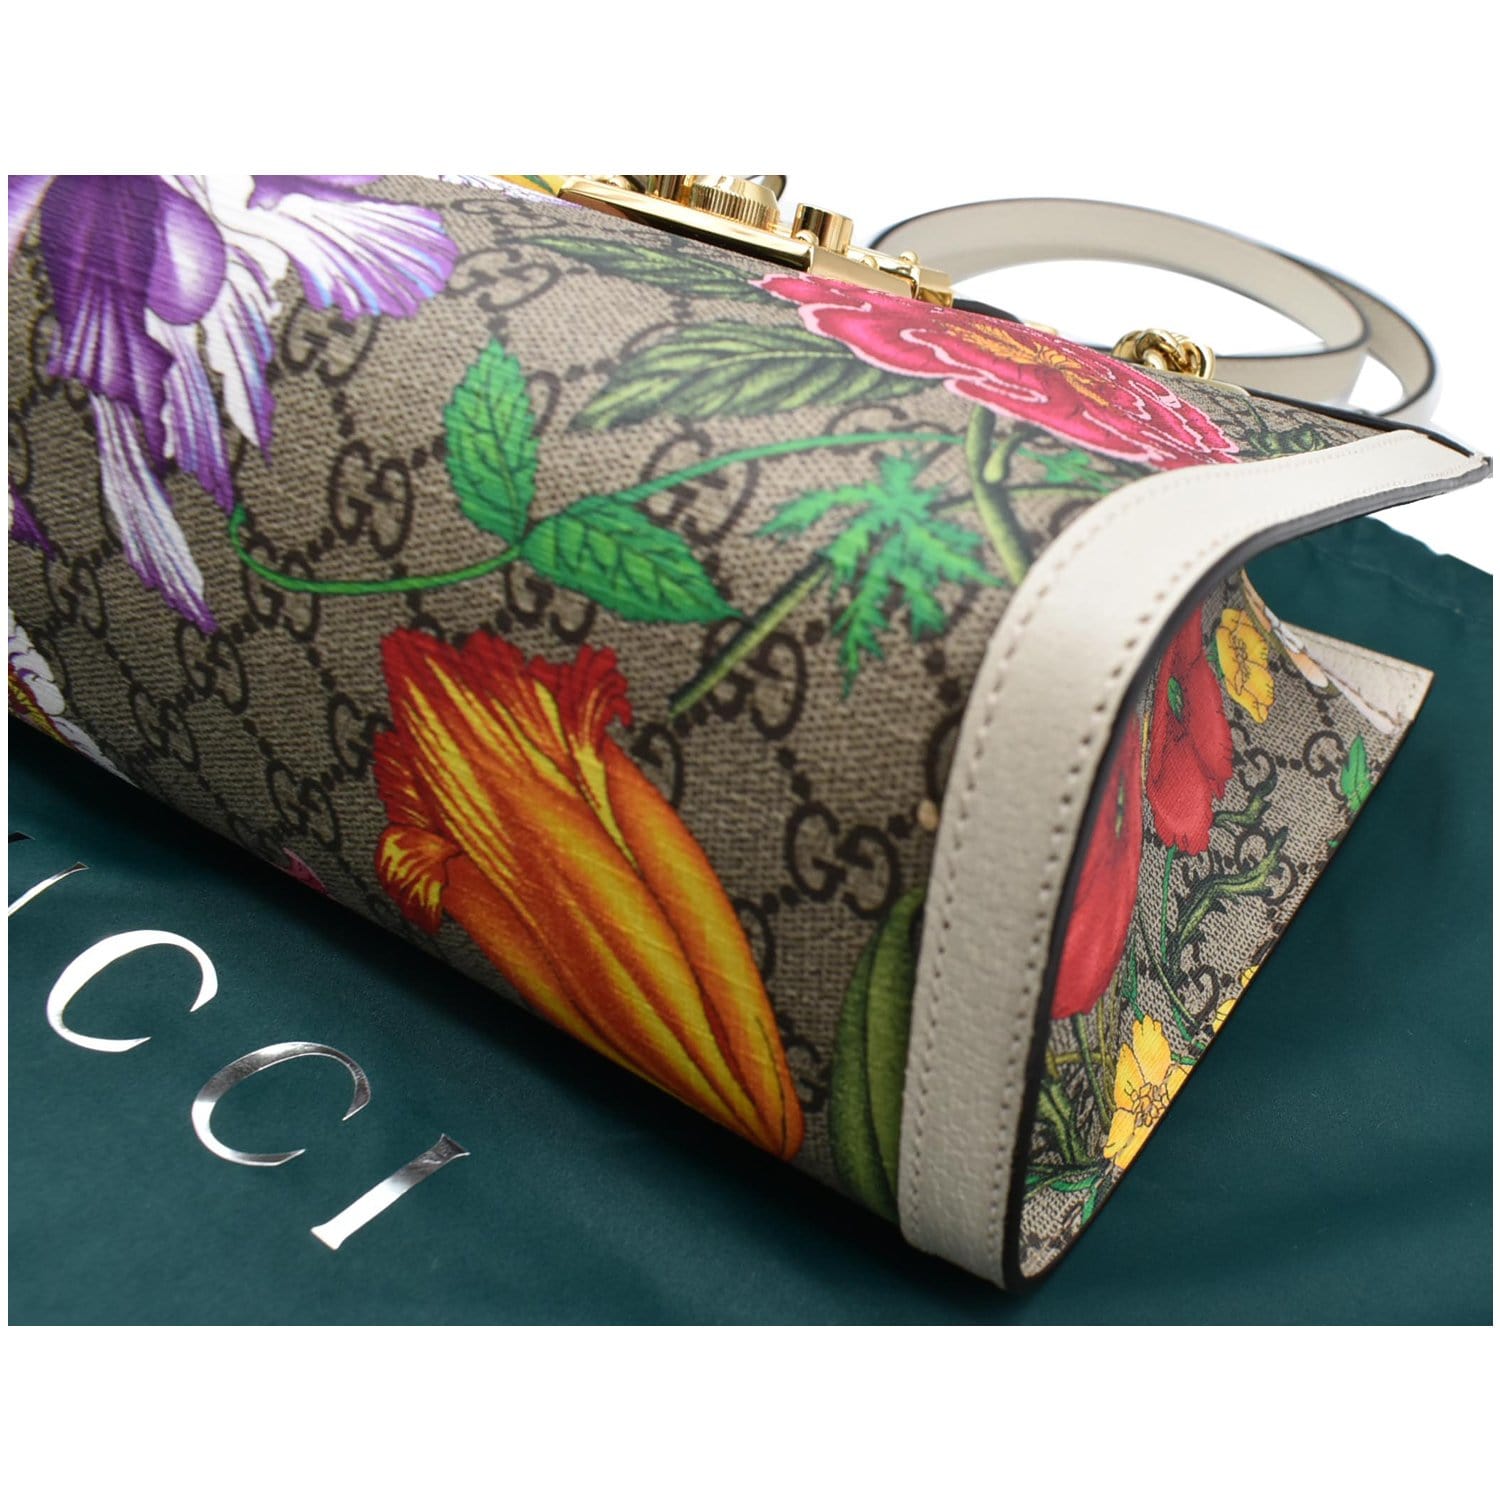 Gucci, Bags, Gucci Floral Gg Logo Shoulder Small Bag